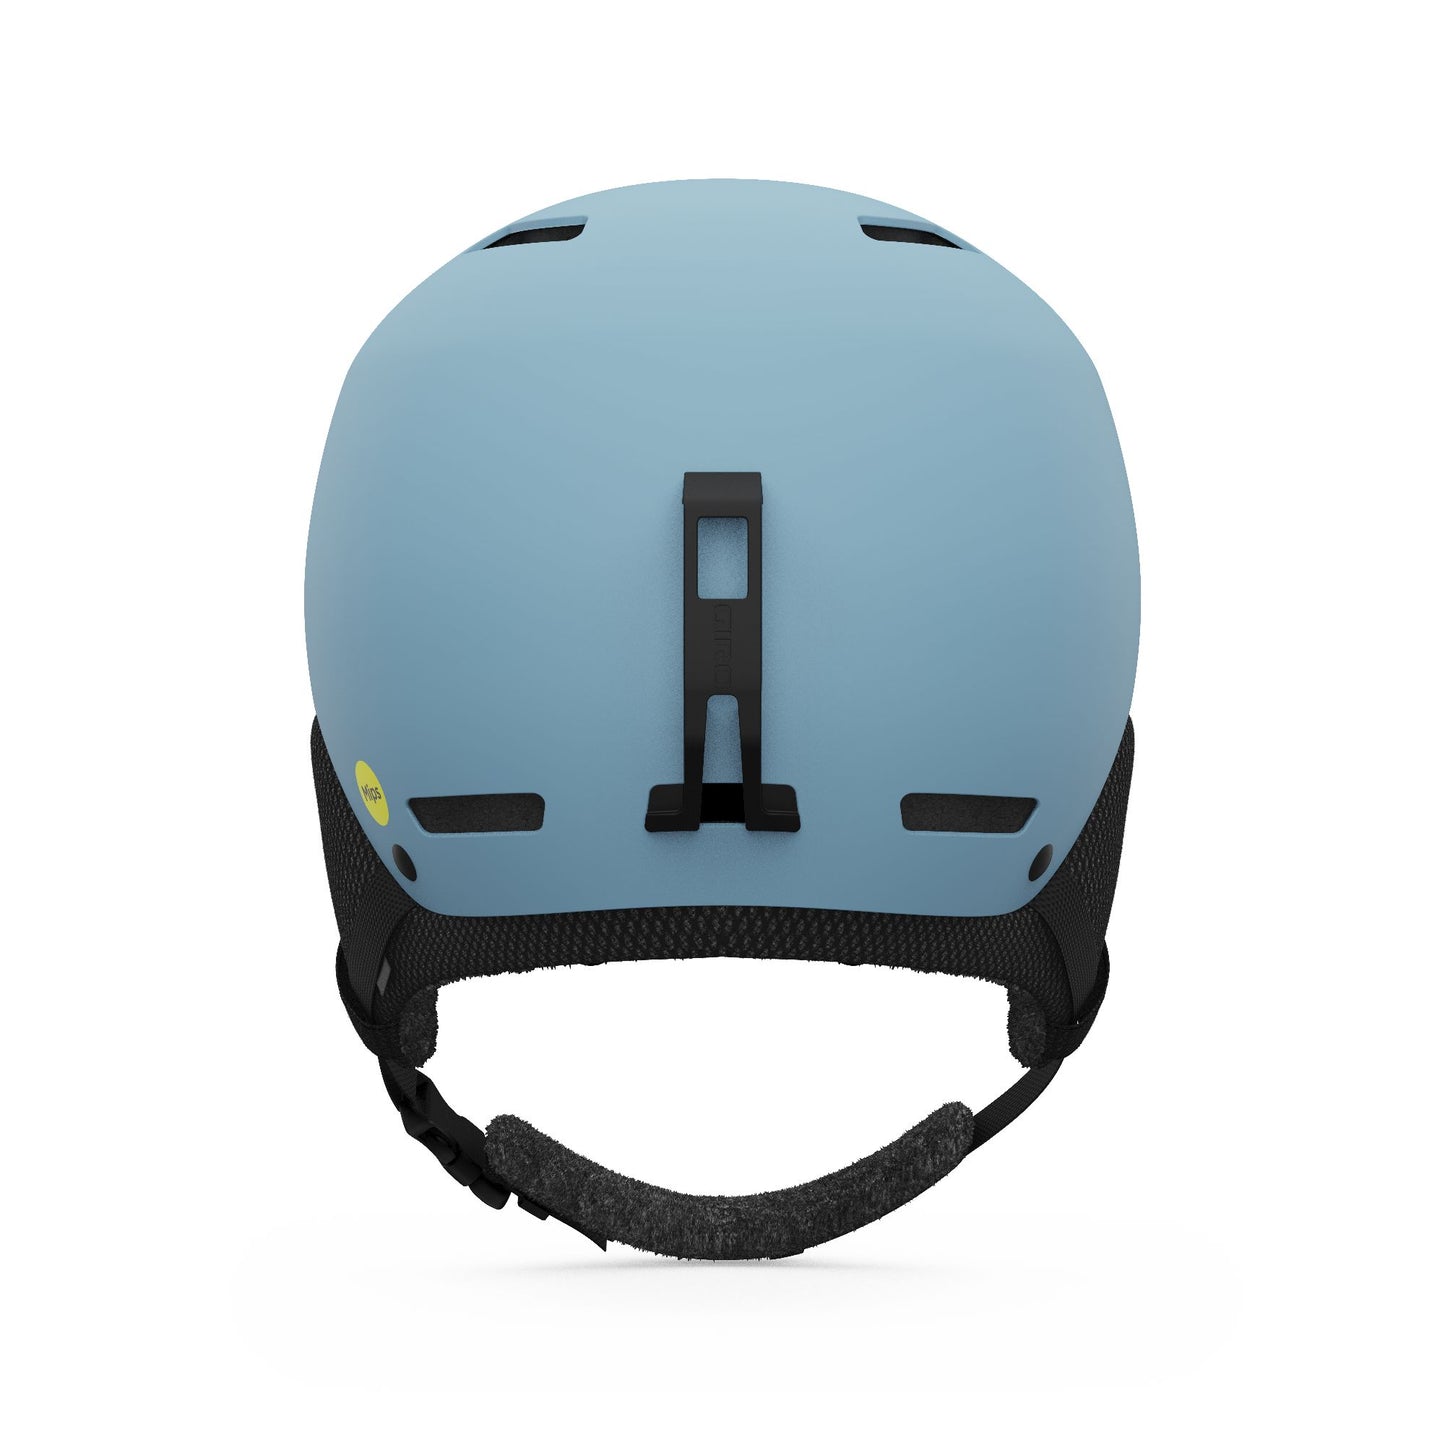 Giro Youth Crue MIPS Helmet Light Harbor Blue Snow Helmets